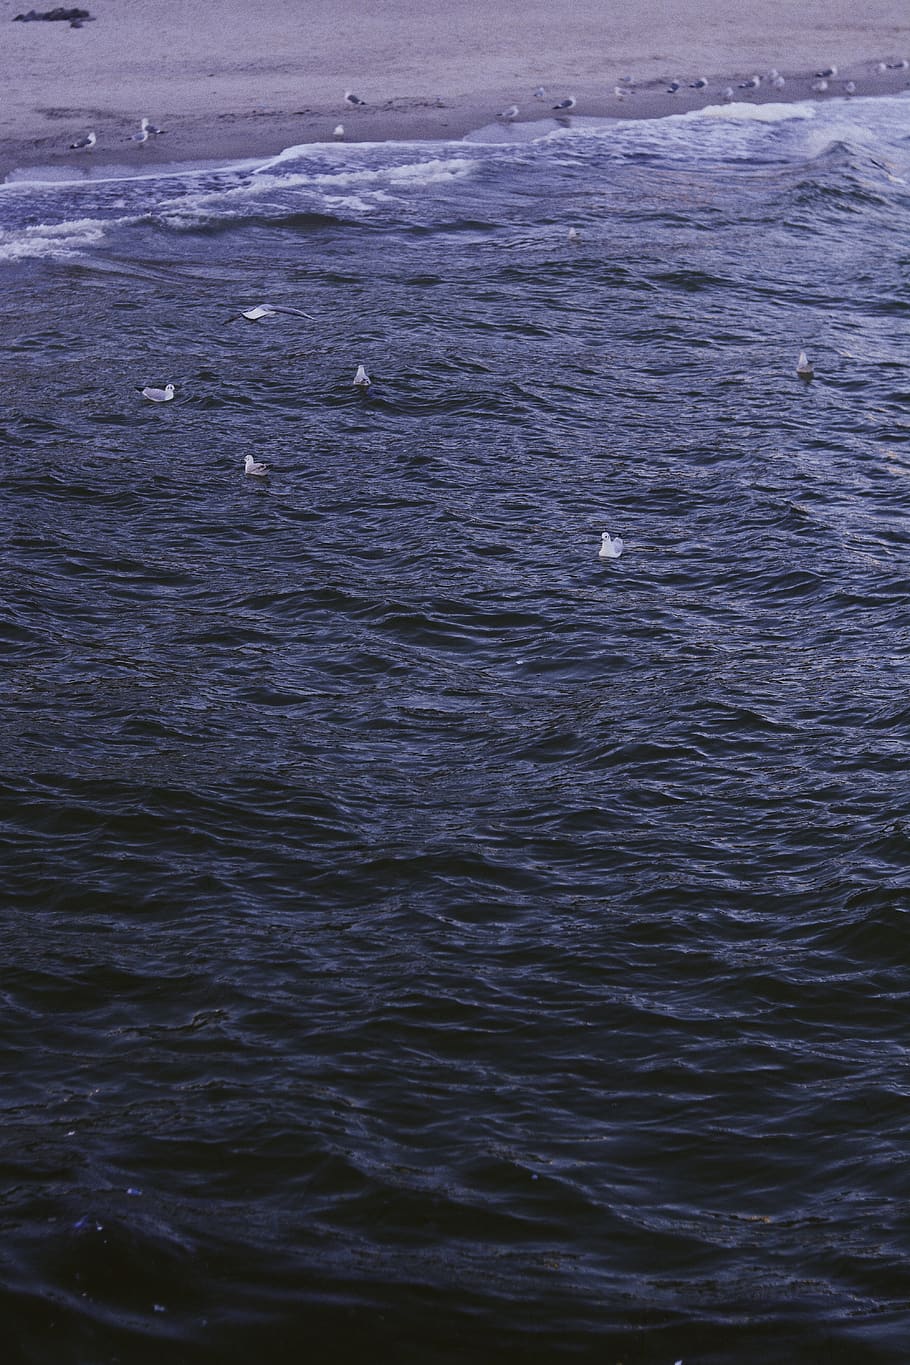 HD wallpaper: film, vsco, gull, sea, wave, waves, nature